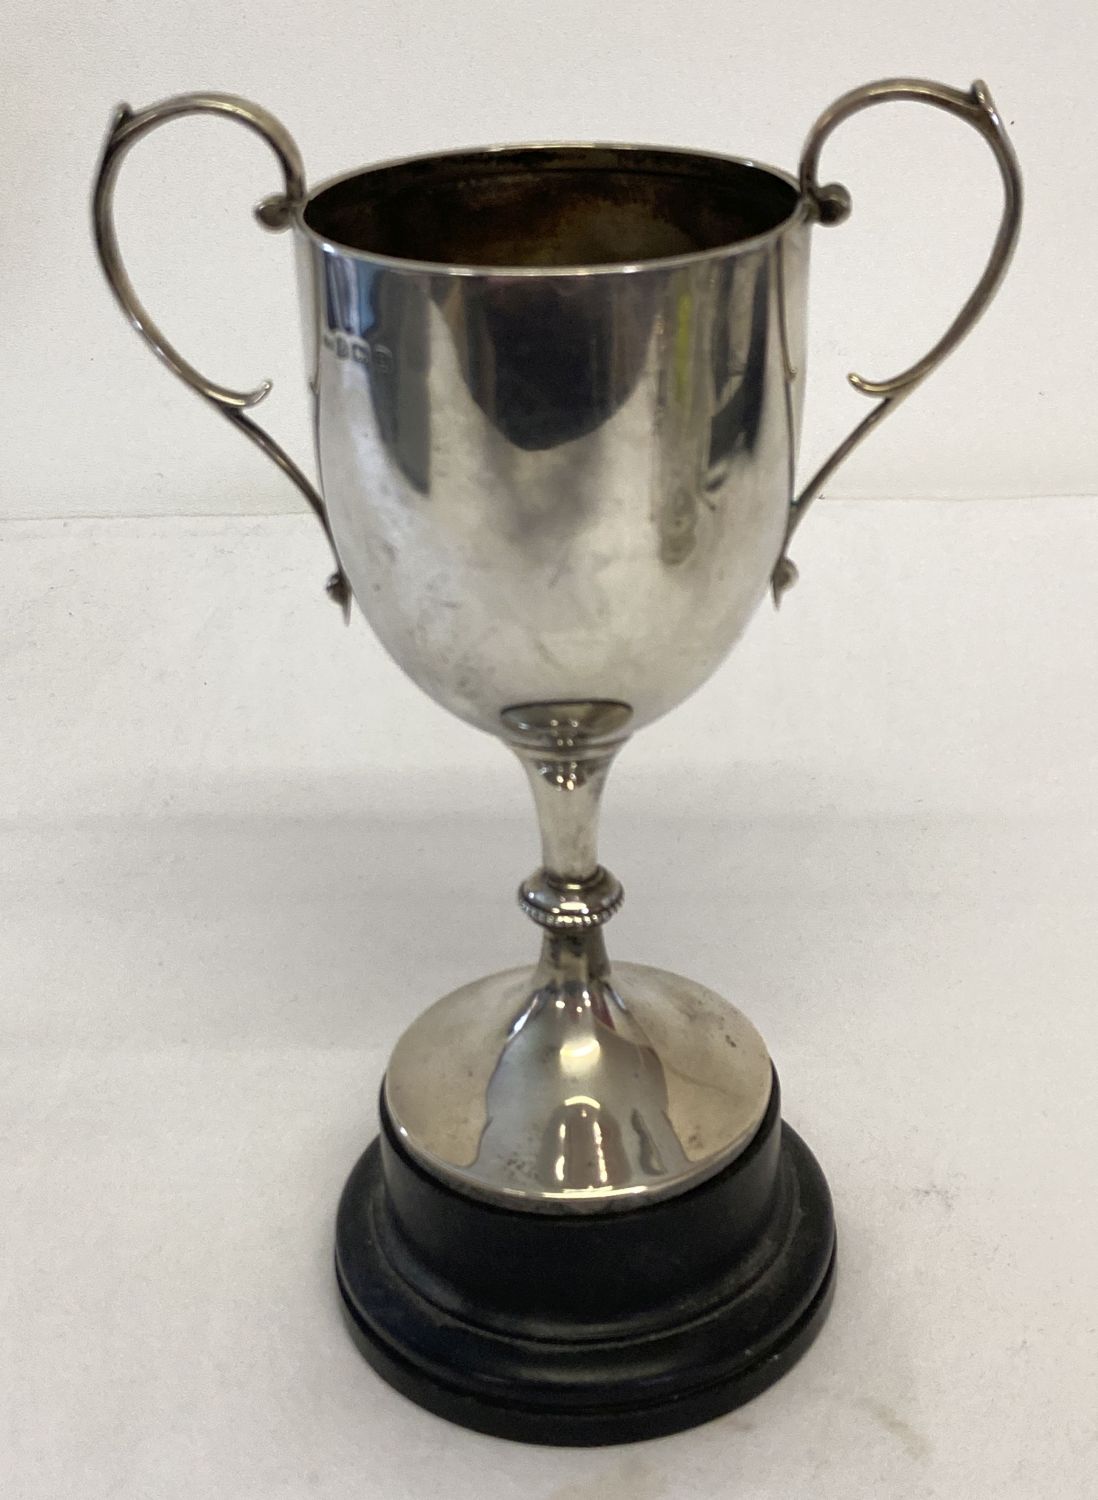 A vintage silver trophy cup on a black wooden stand. Hallmarked William Adams Ltd, Birmingham 1929.